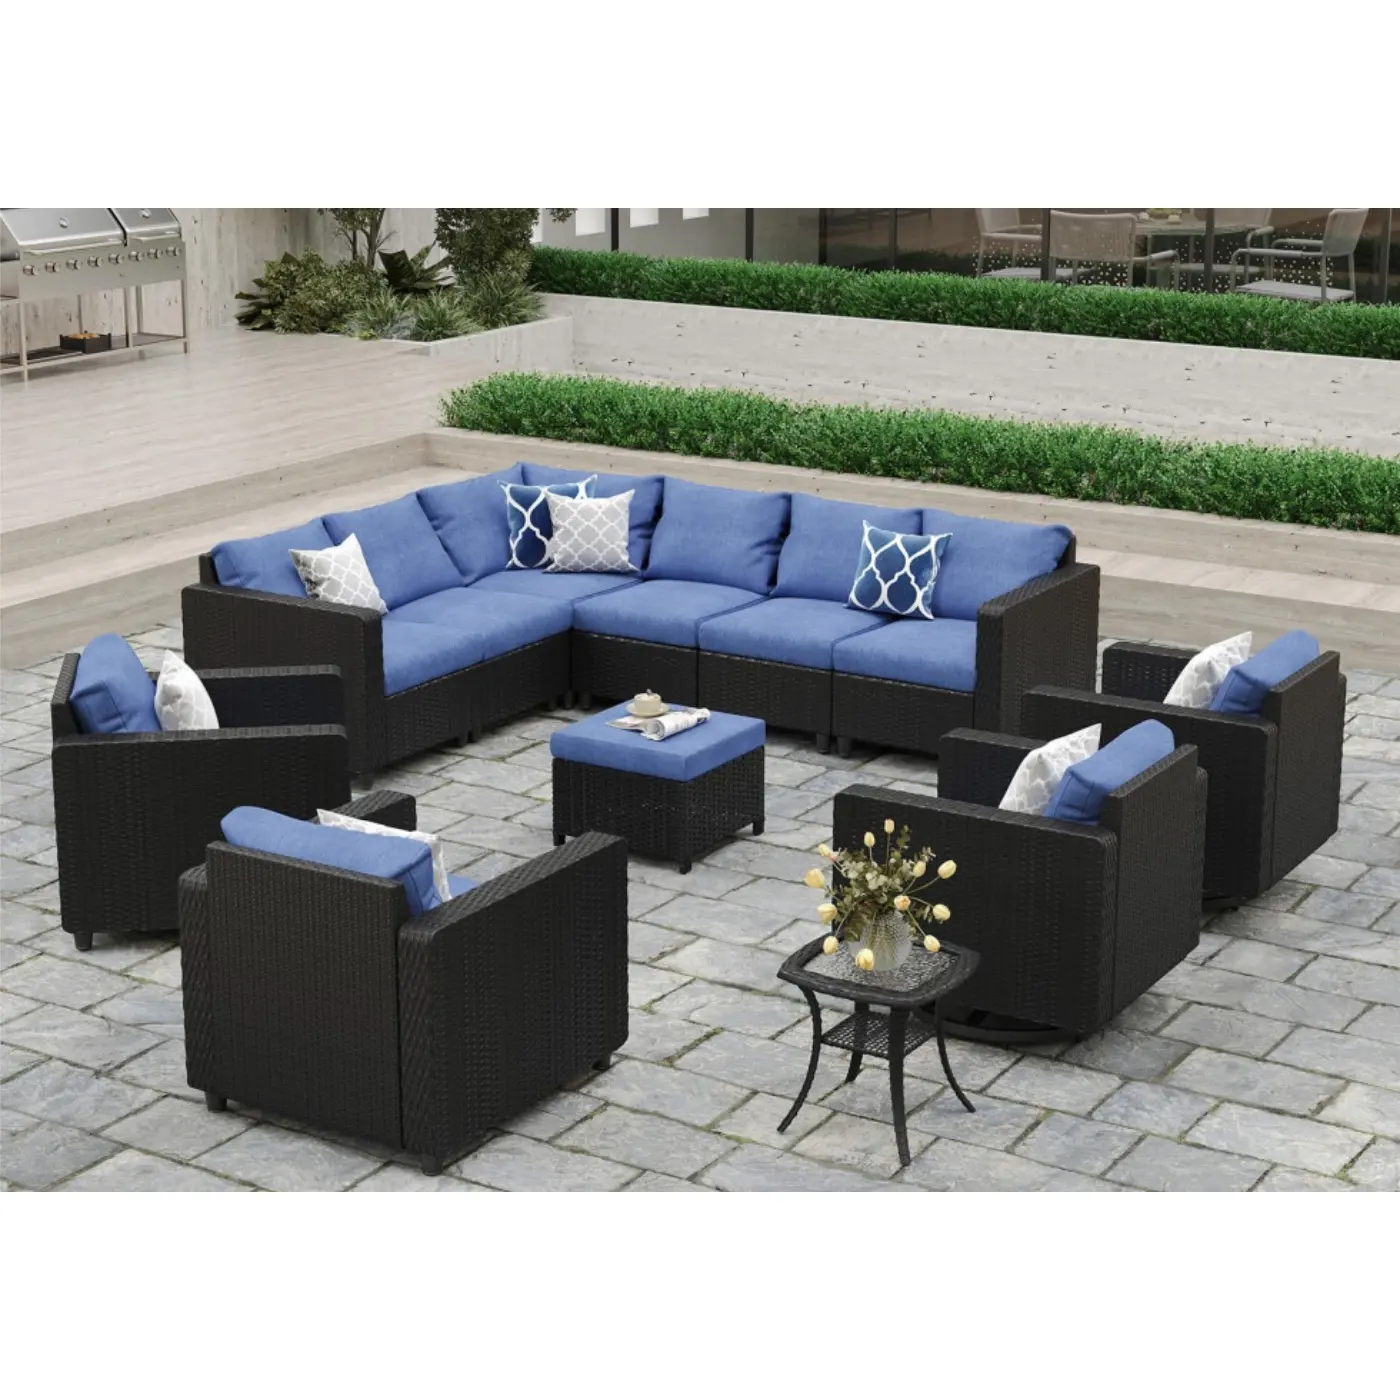 Best Seller Outdoor Conversational Furniture Set Wicker Sectional Sofas Patio Rattan Set